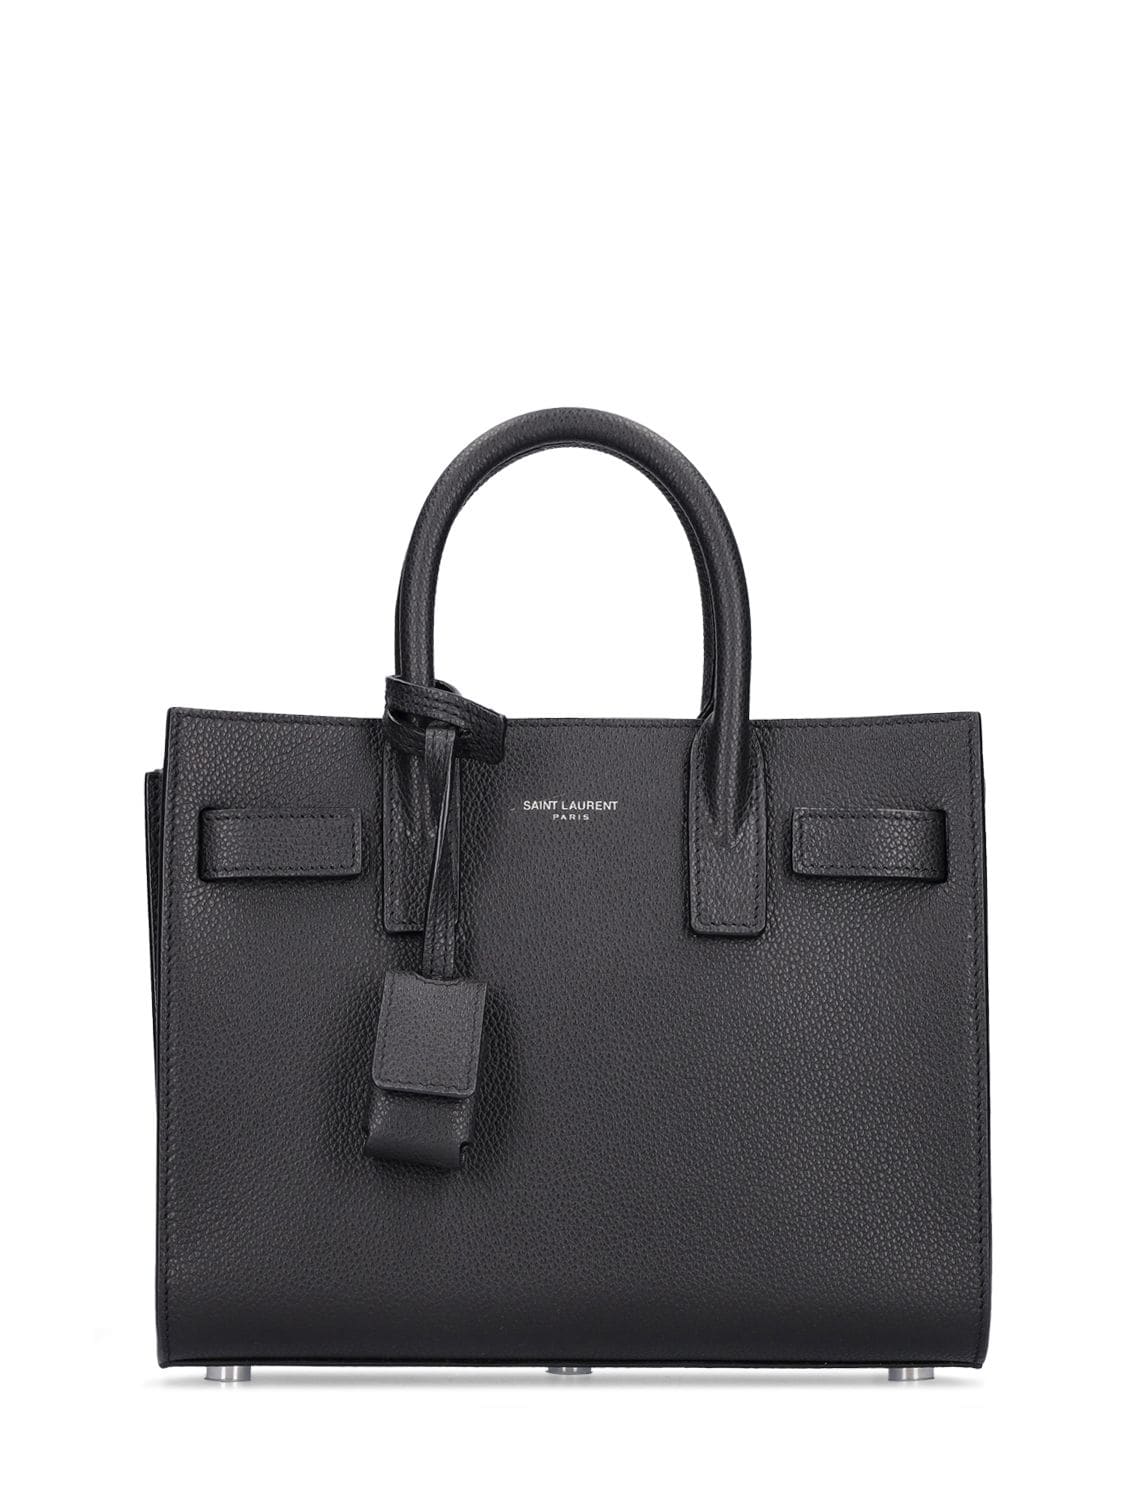 Saint Laurent Nano Sac De Jour Leather Top Handle Bag In Black